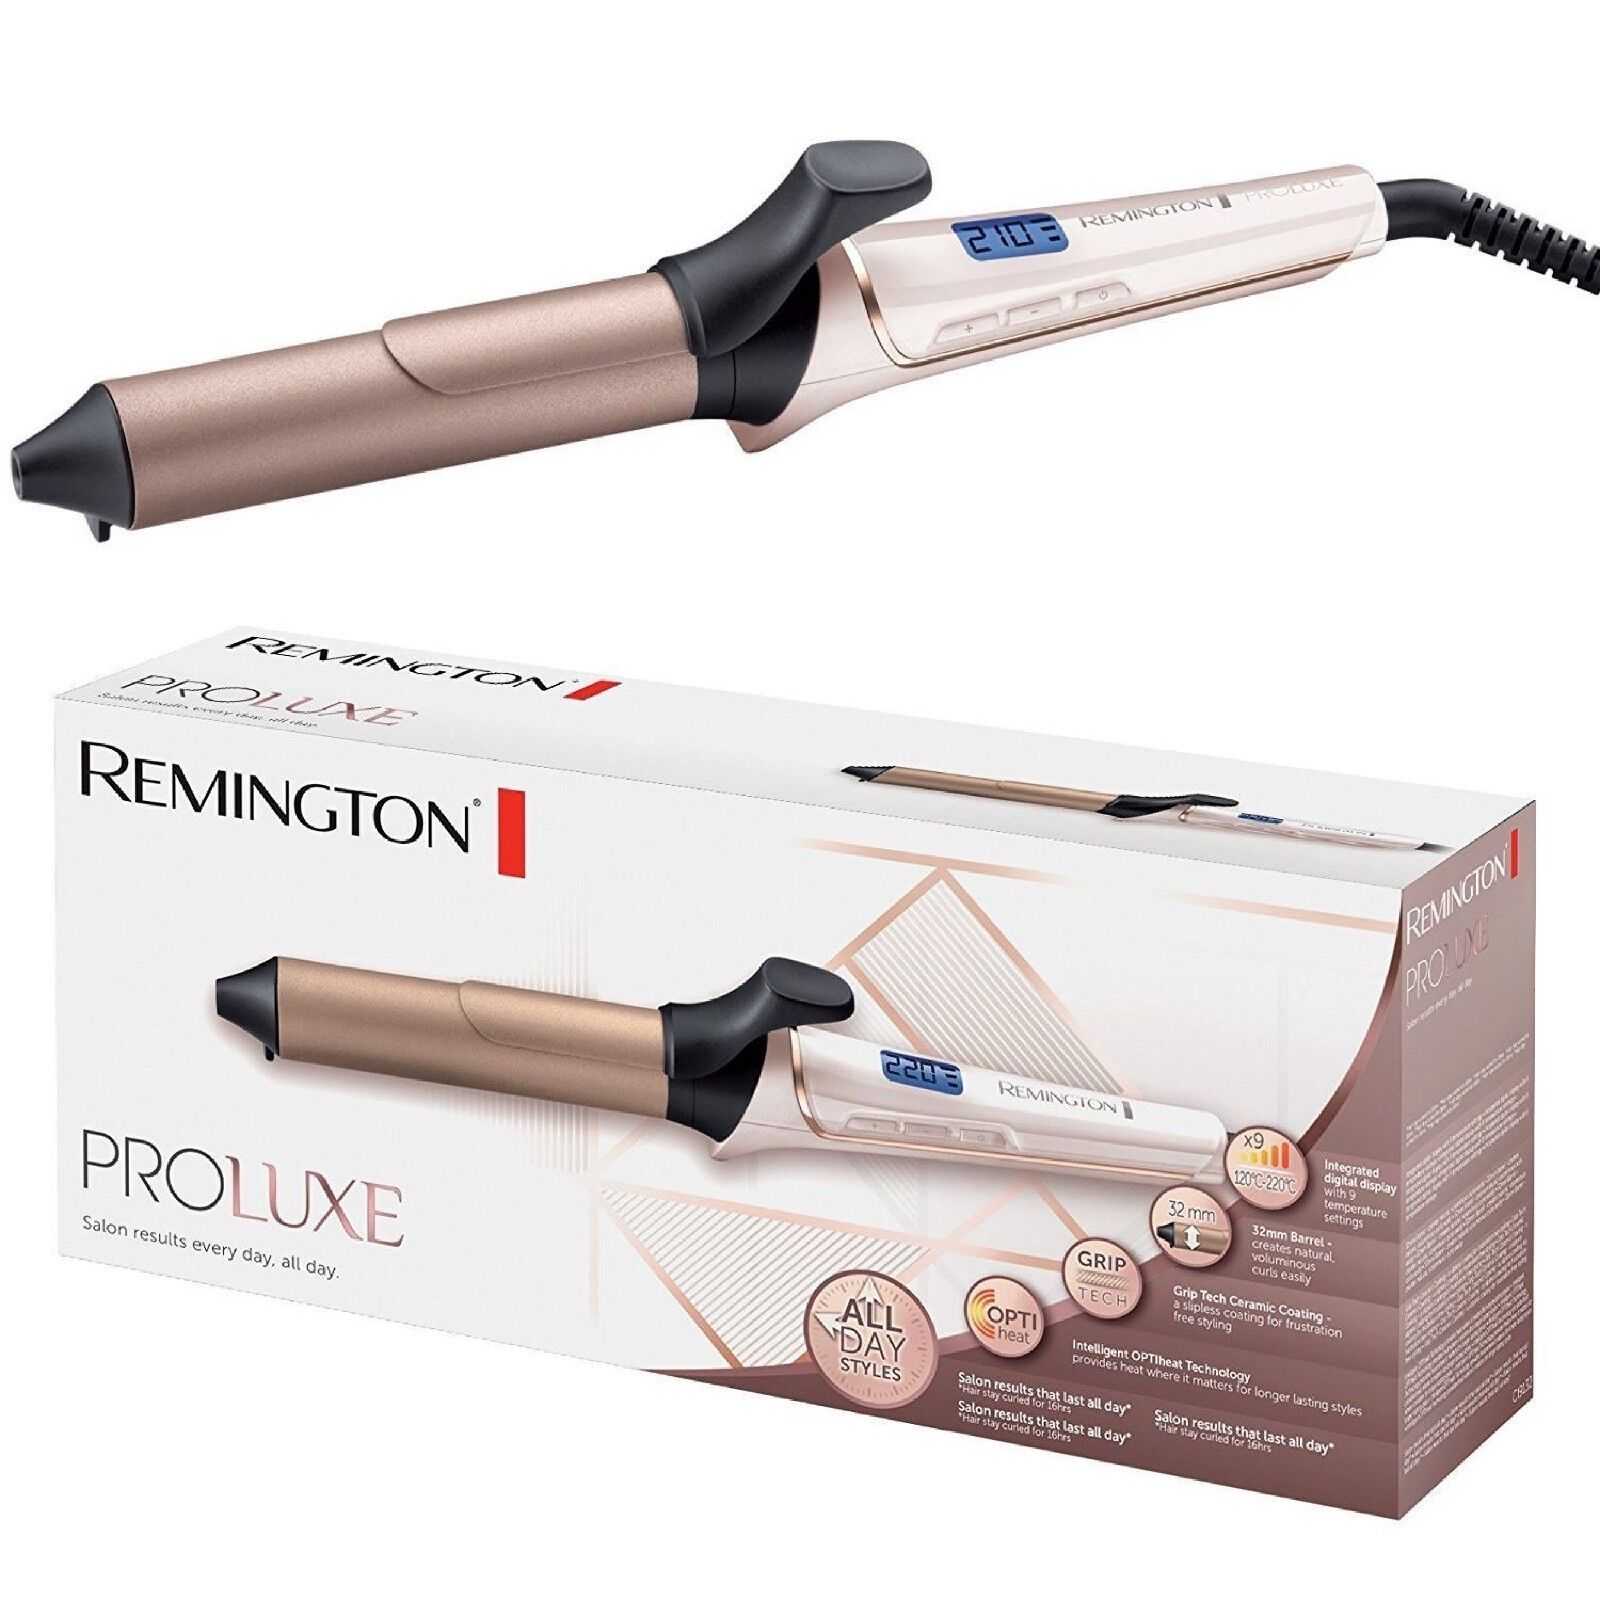 Remington Proluxe Hair Dryer, Rose Gold